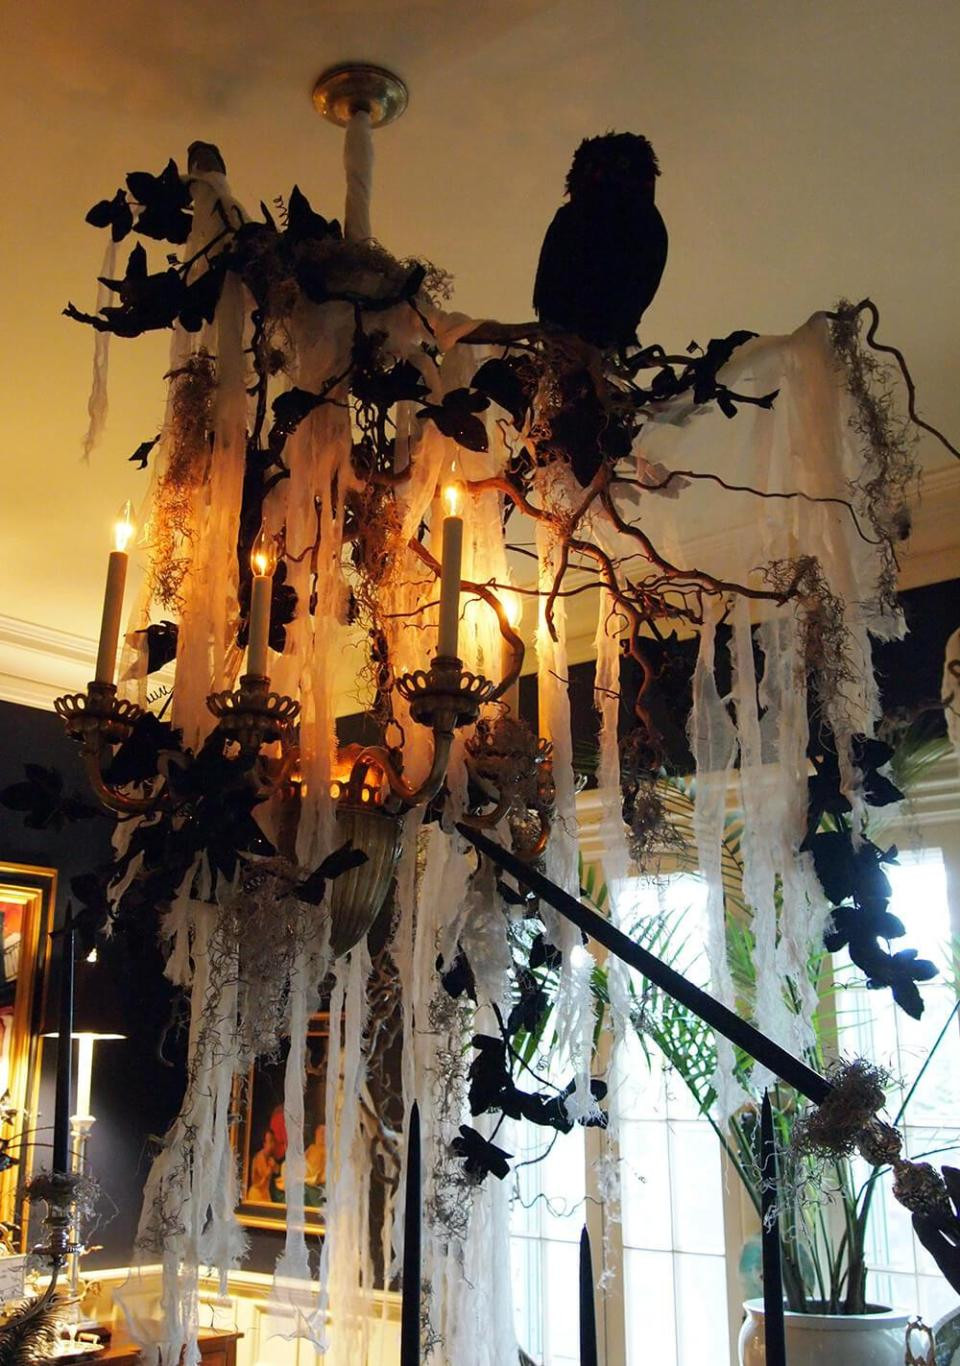 Indoor Halloween Party Decoration Ideas
 51 Spooky DIY Indoor Halloween Decoration Ideas For 2019